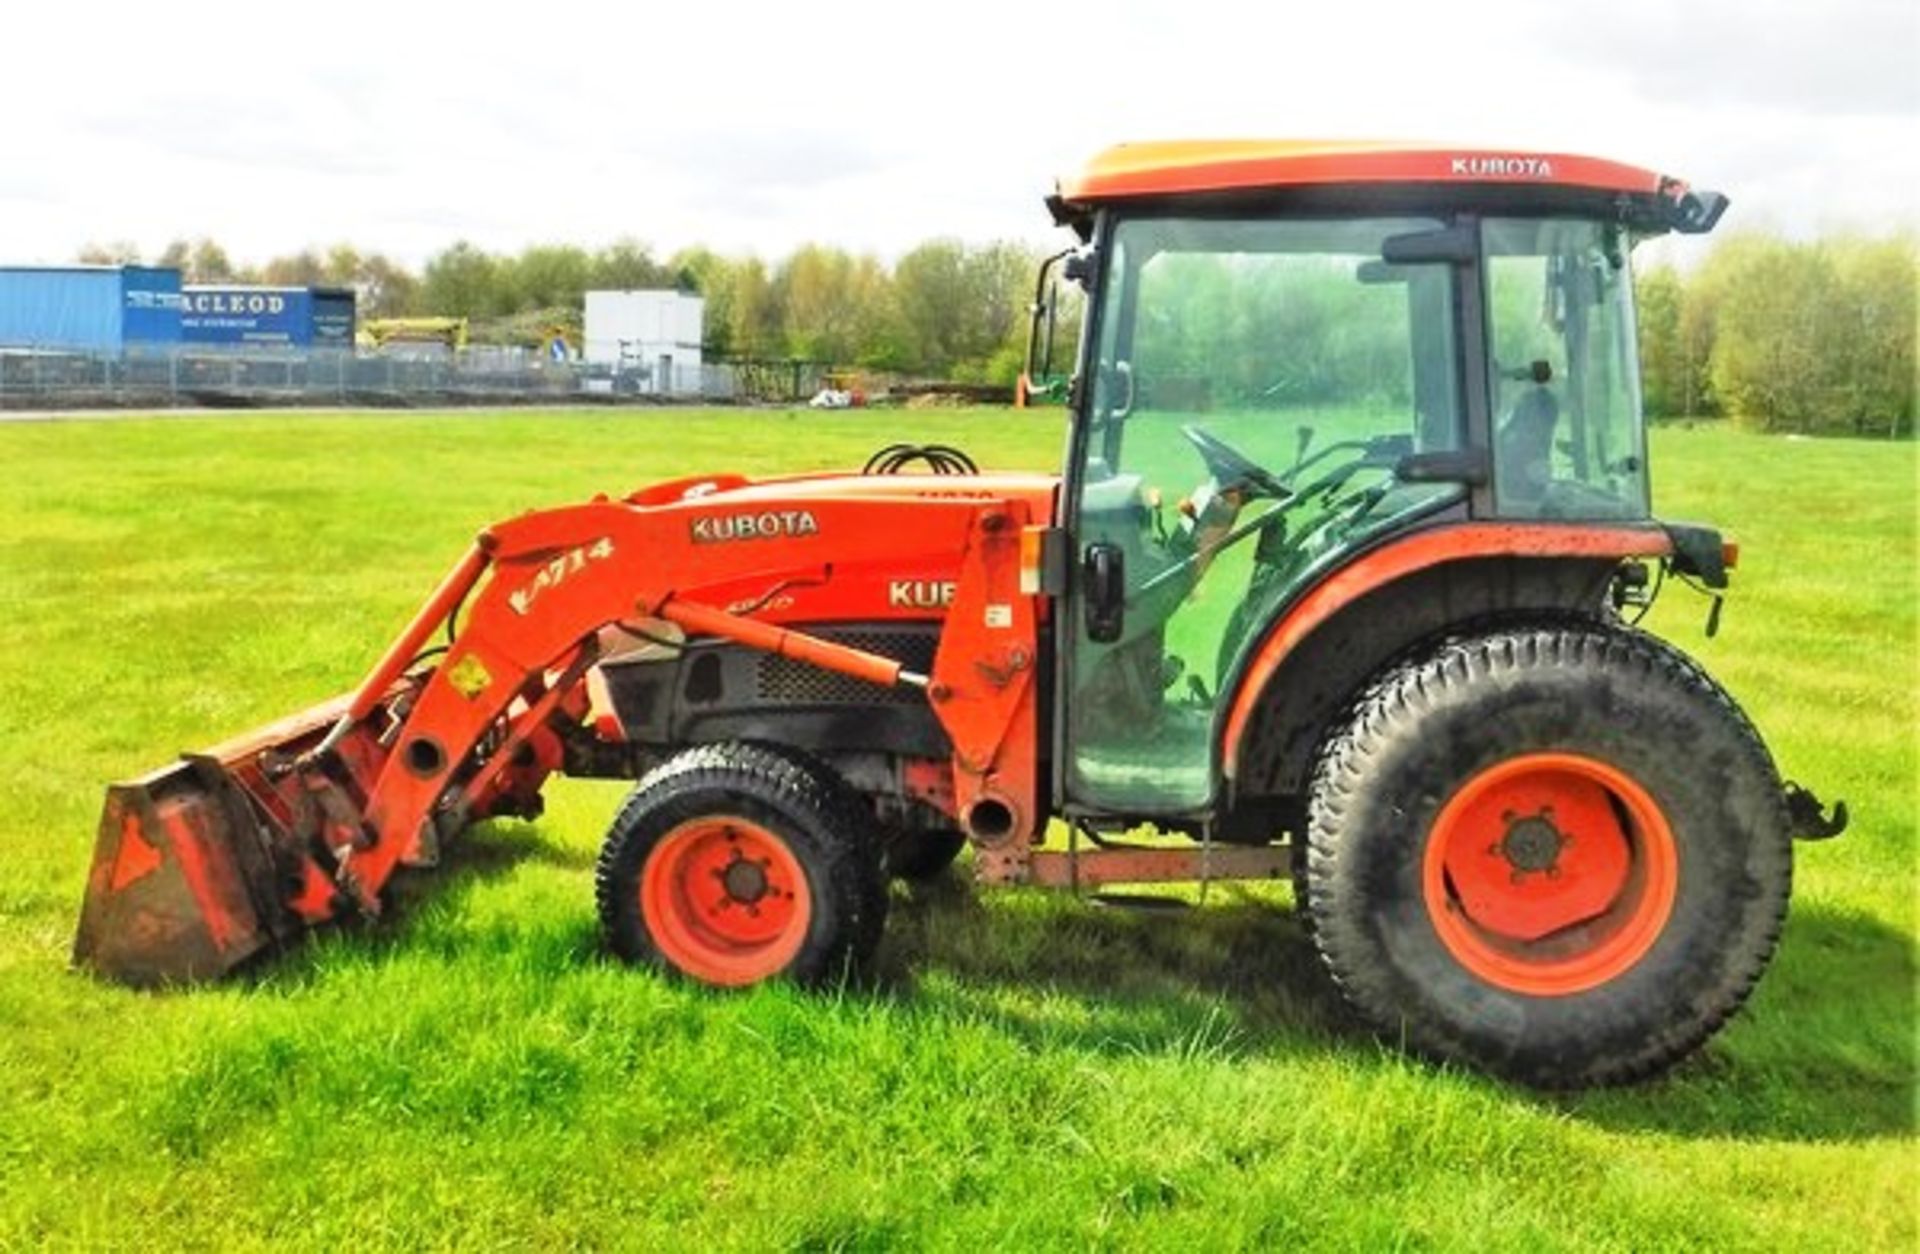 KUBOTA L4240 tractor c/w loader model LA714. Reg No SP08 EOK, s/n 3029671535. 3285 hrs (not verified - Bild 16 aus 17